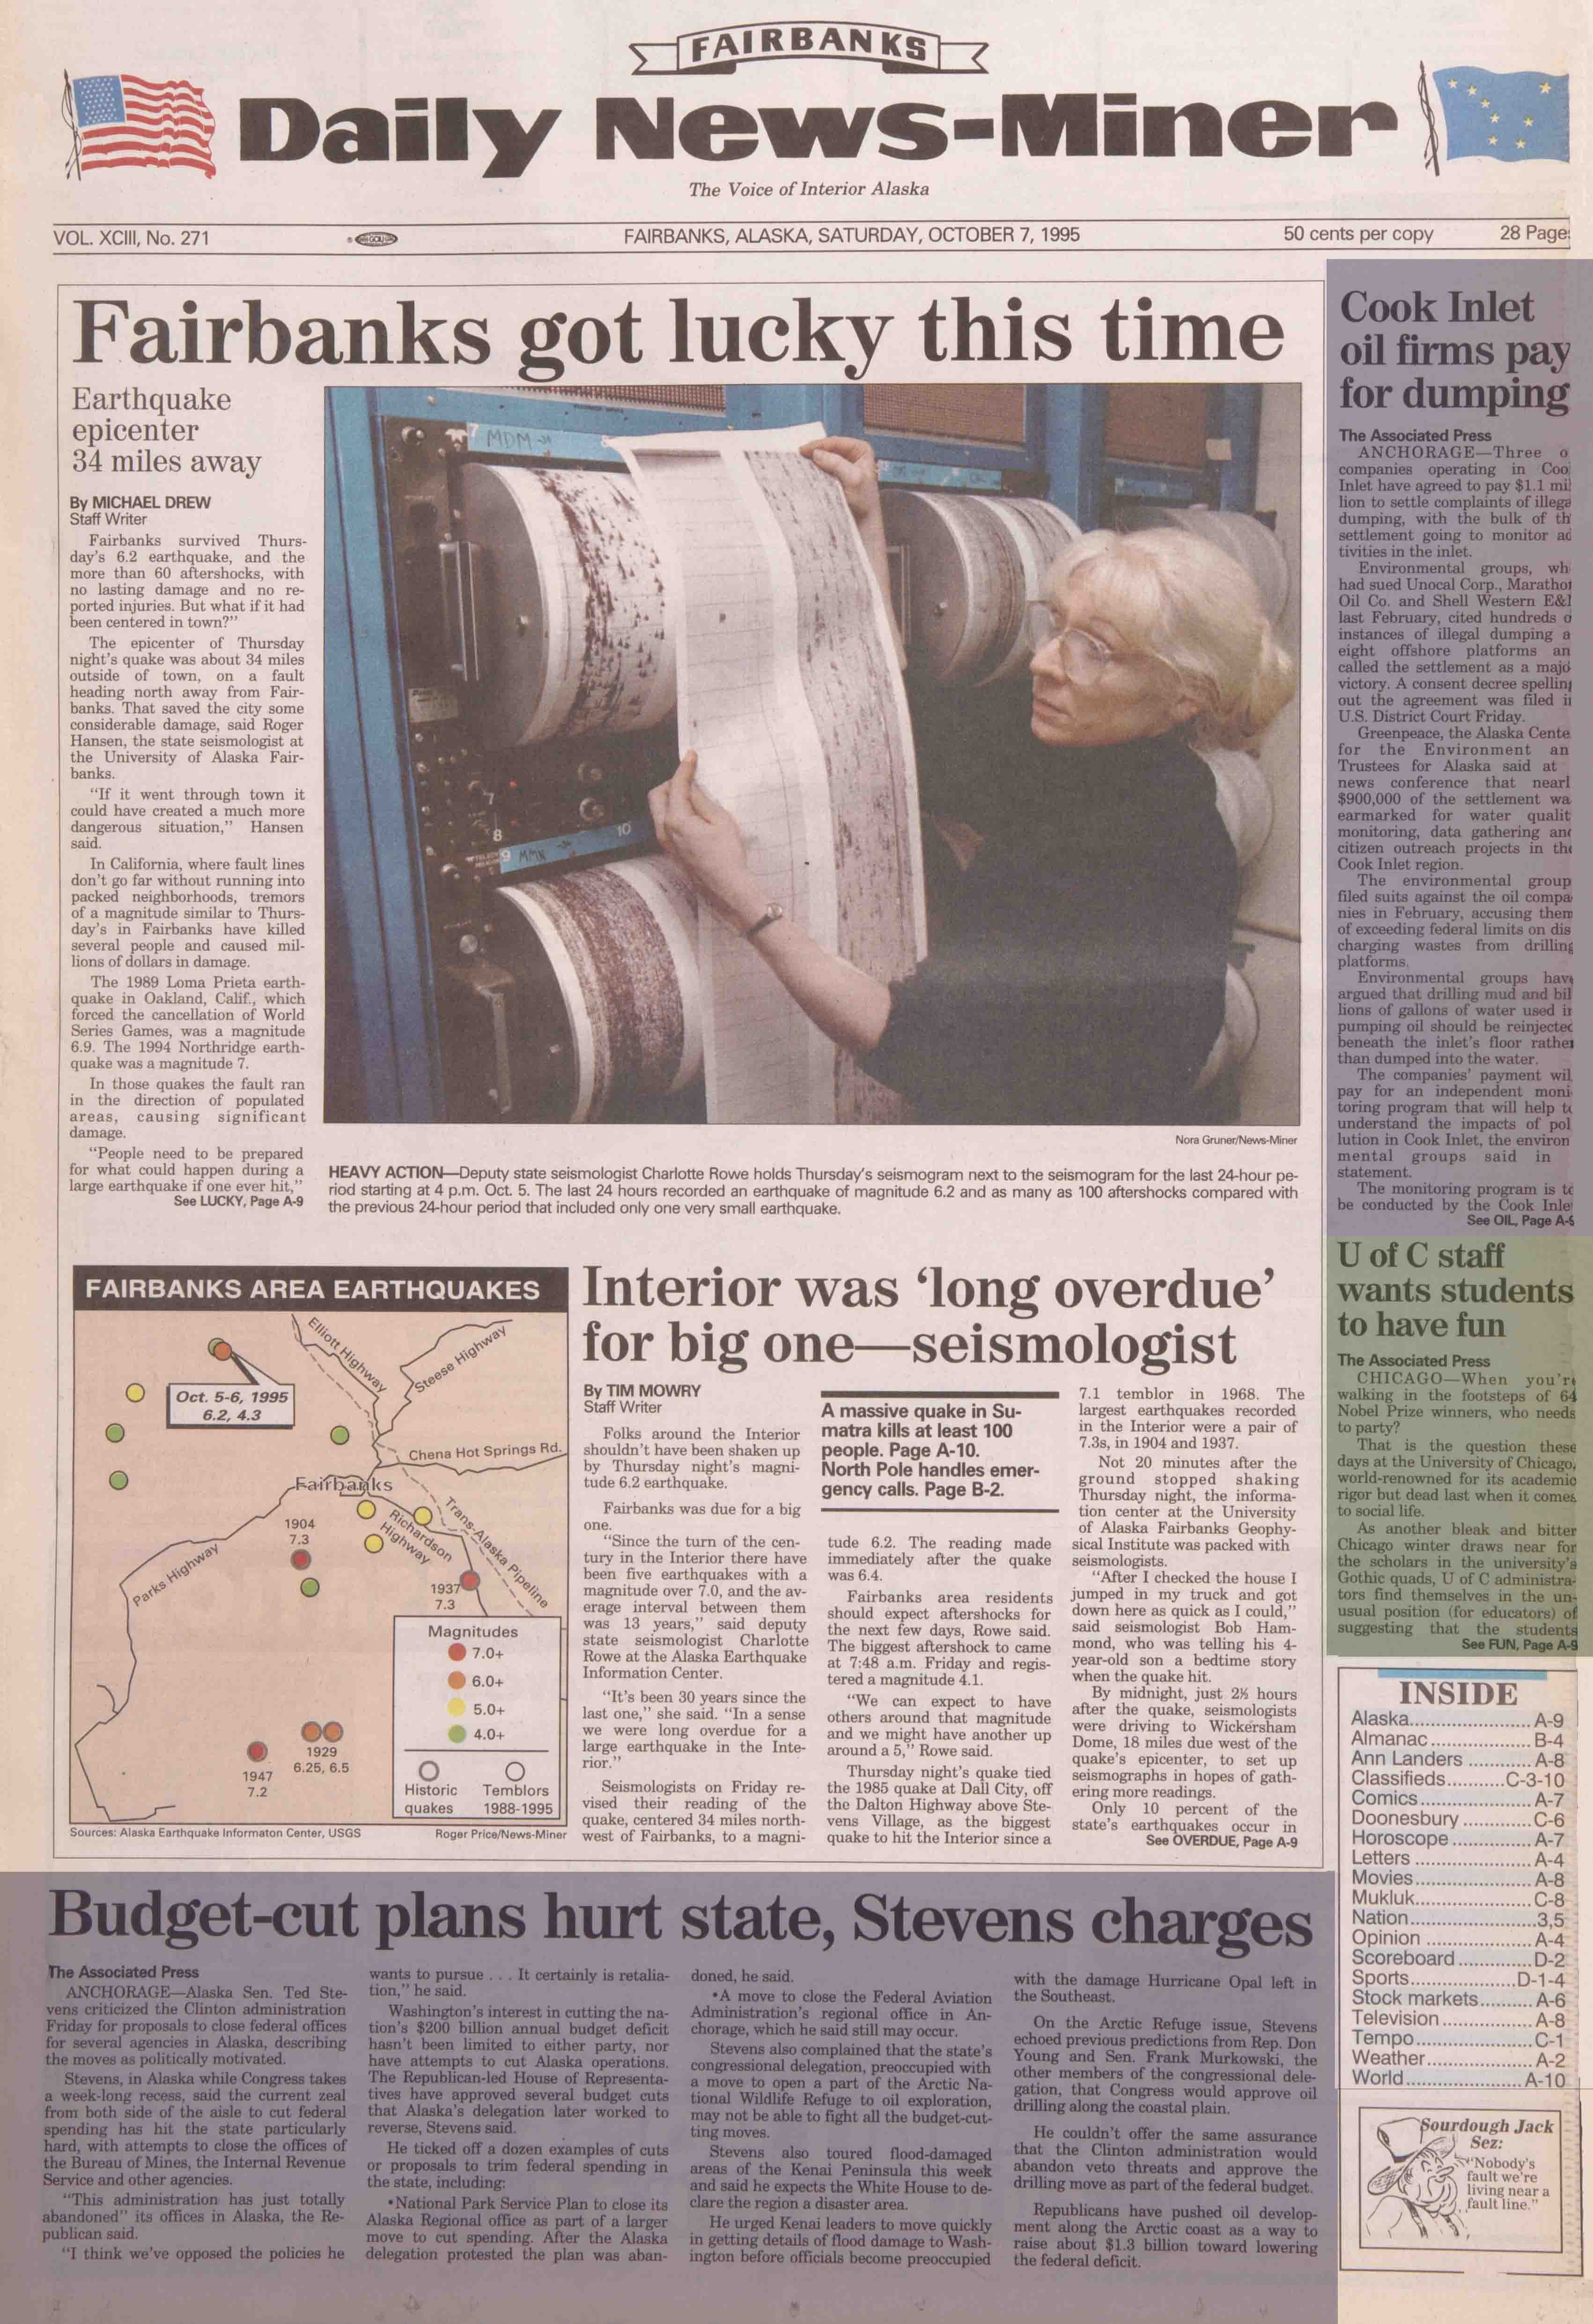 1995 October 7, Fairbanks Daily News-Miner (pg 1)